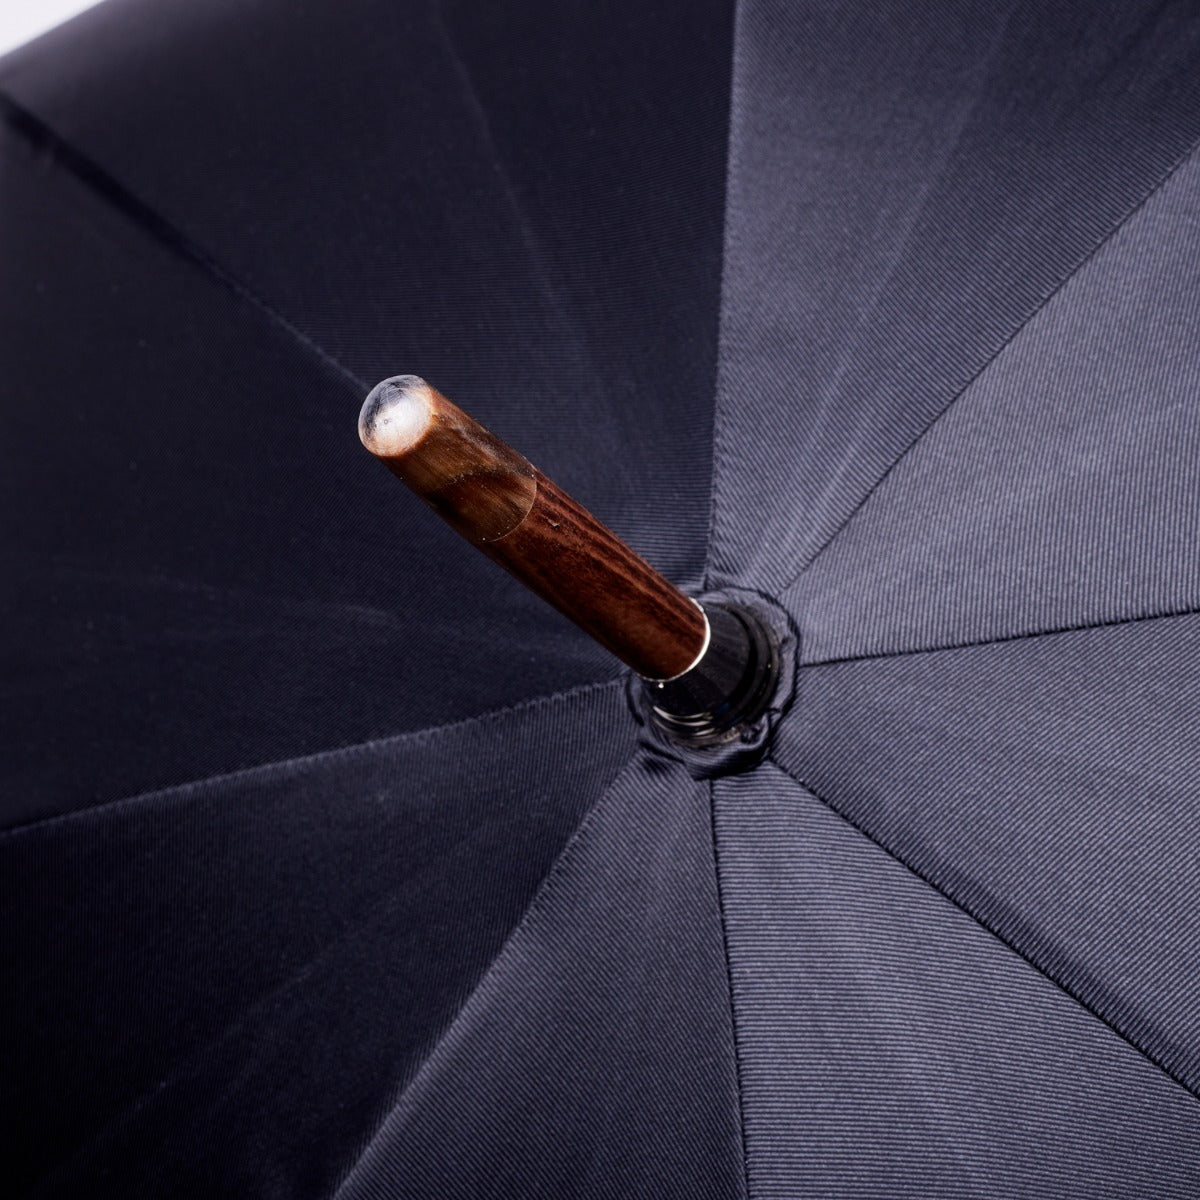 Bamboo Handle Umbrella with Black Canopy